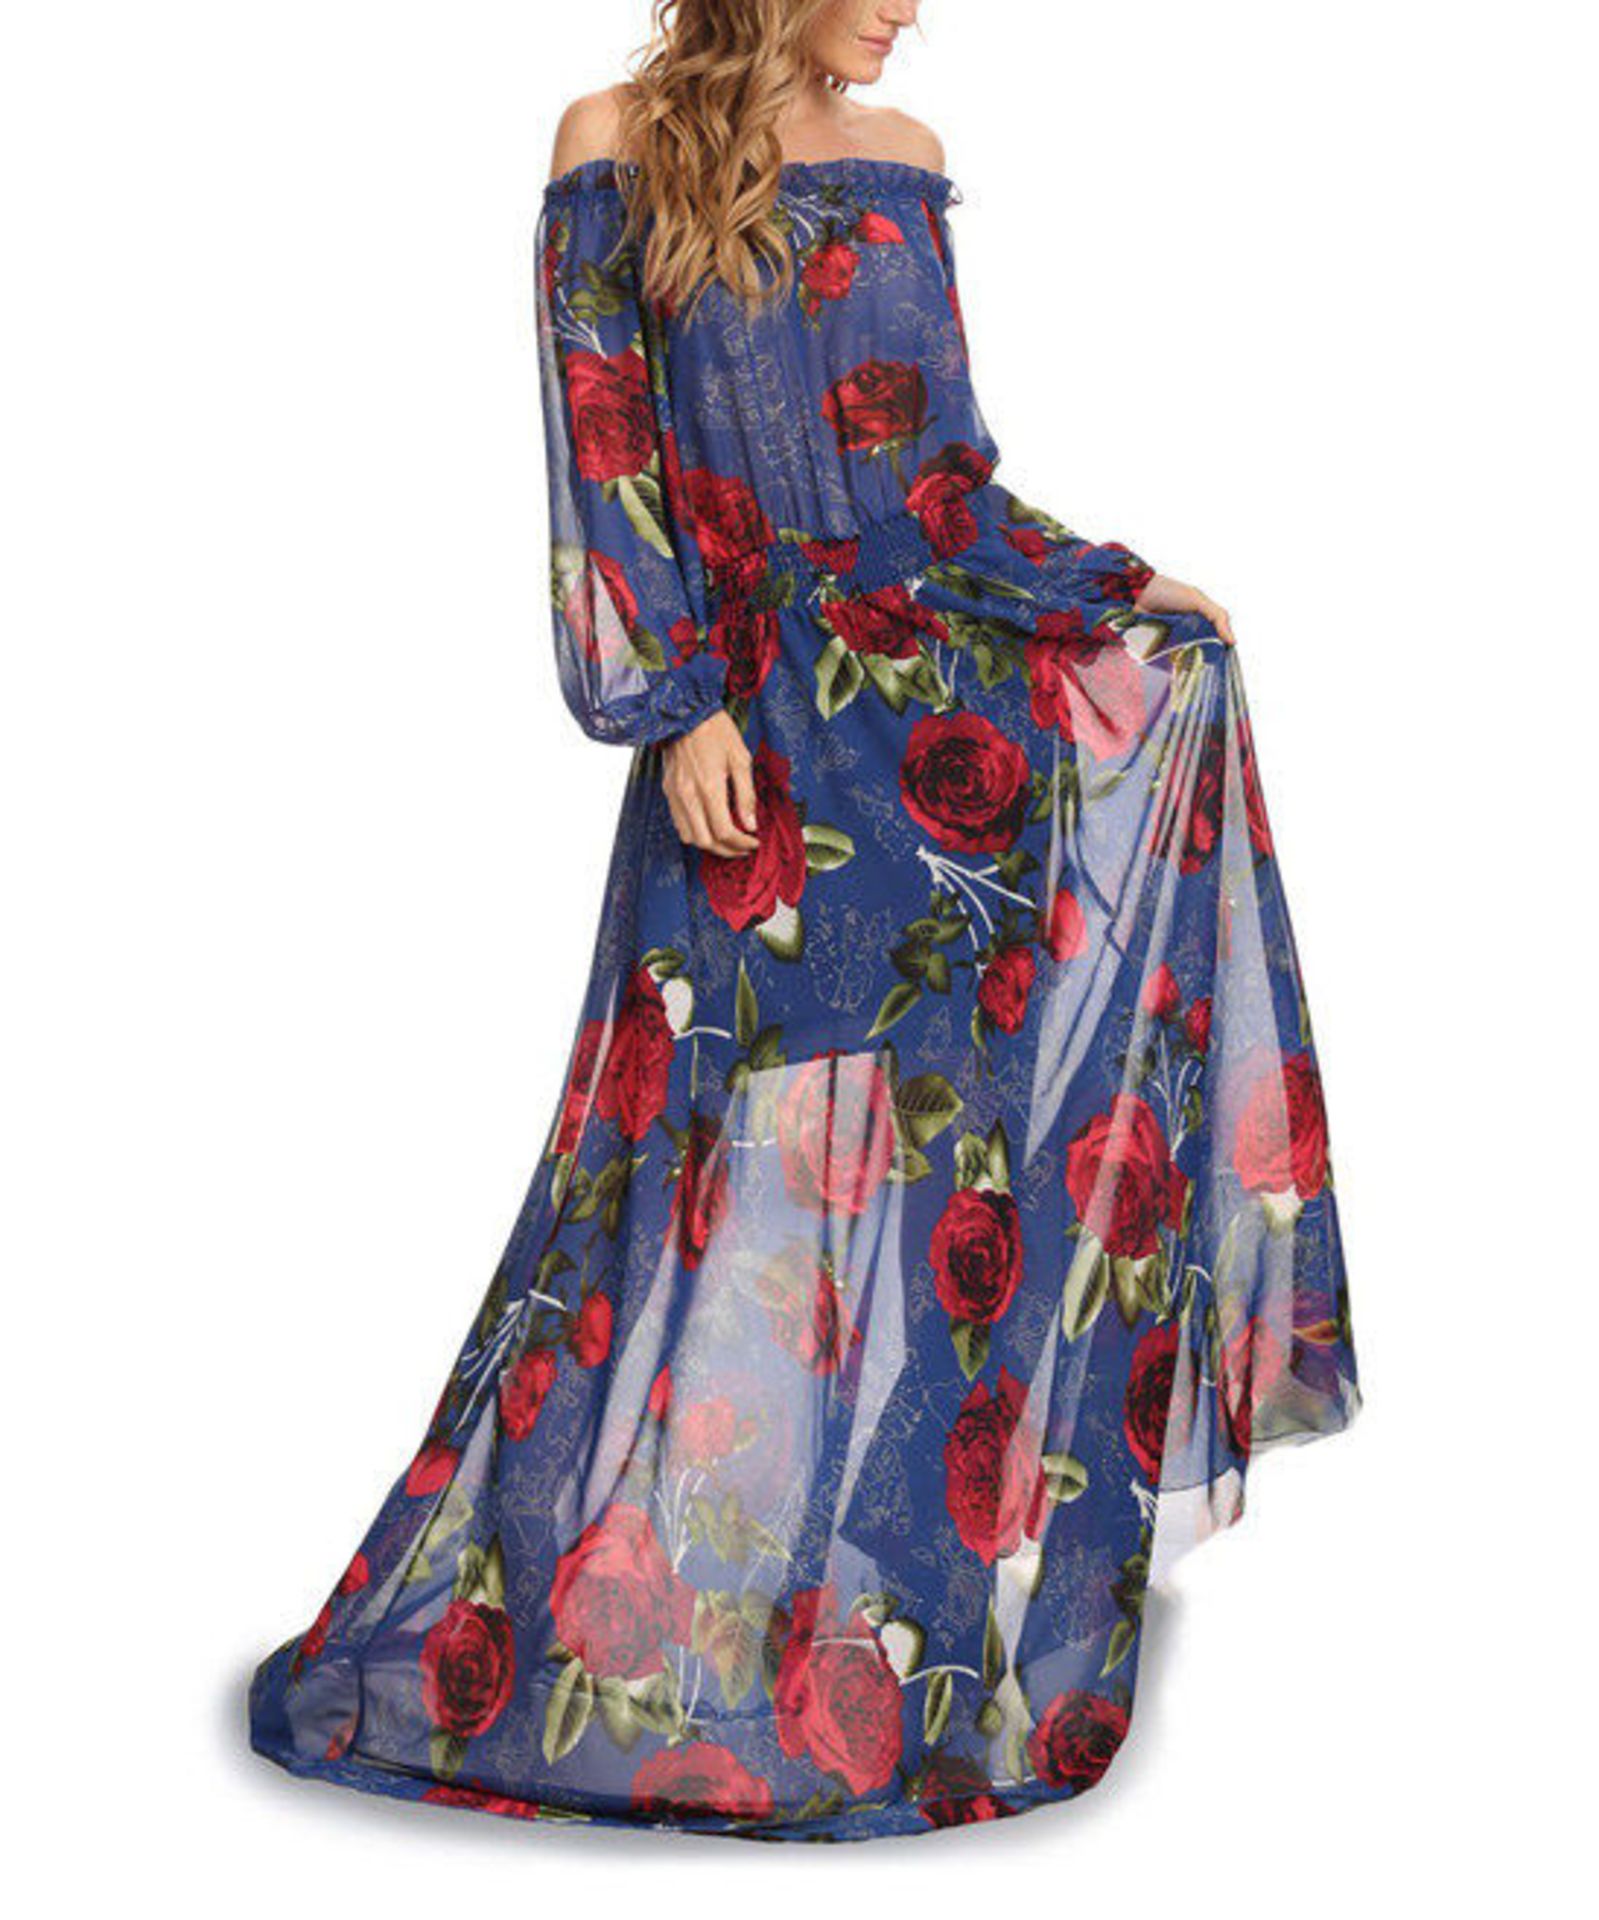 Brand New Blue & Red Sheer Floral Peasant Dress US Medium (Ref: 40484292 F1R)